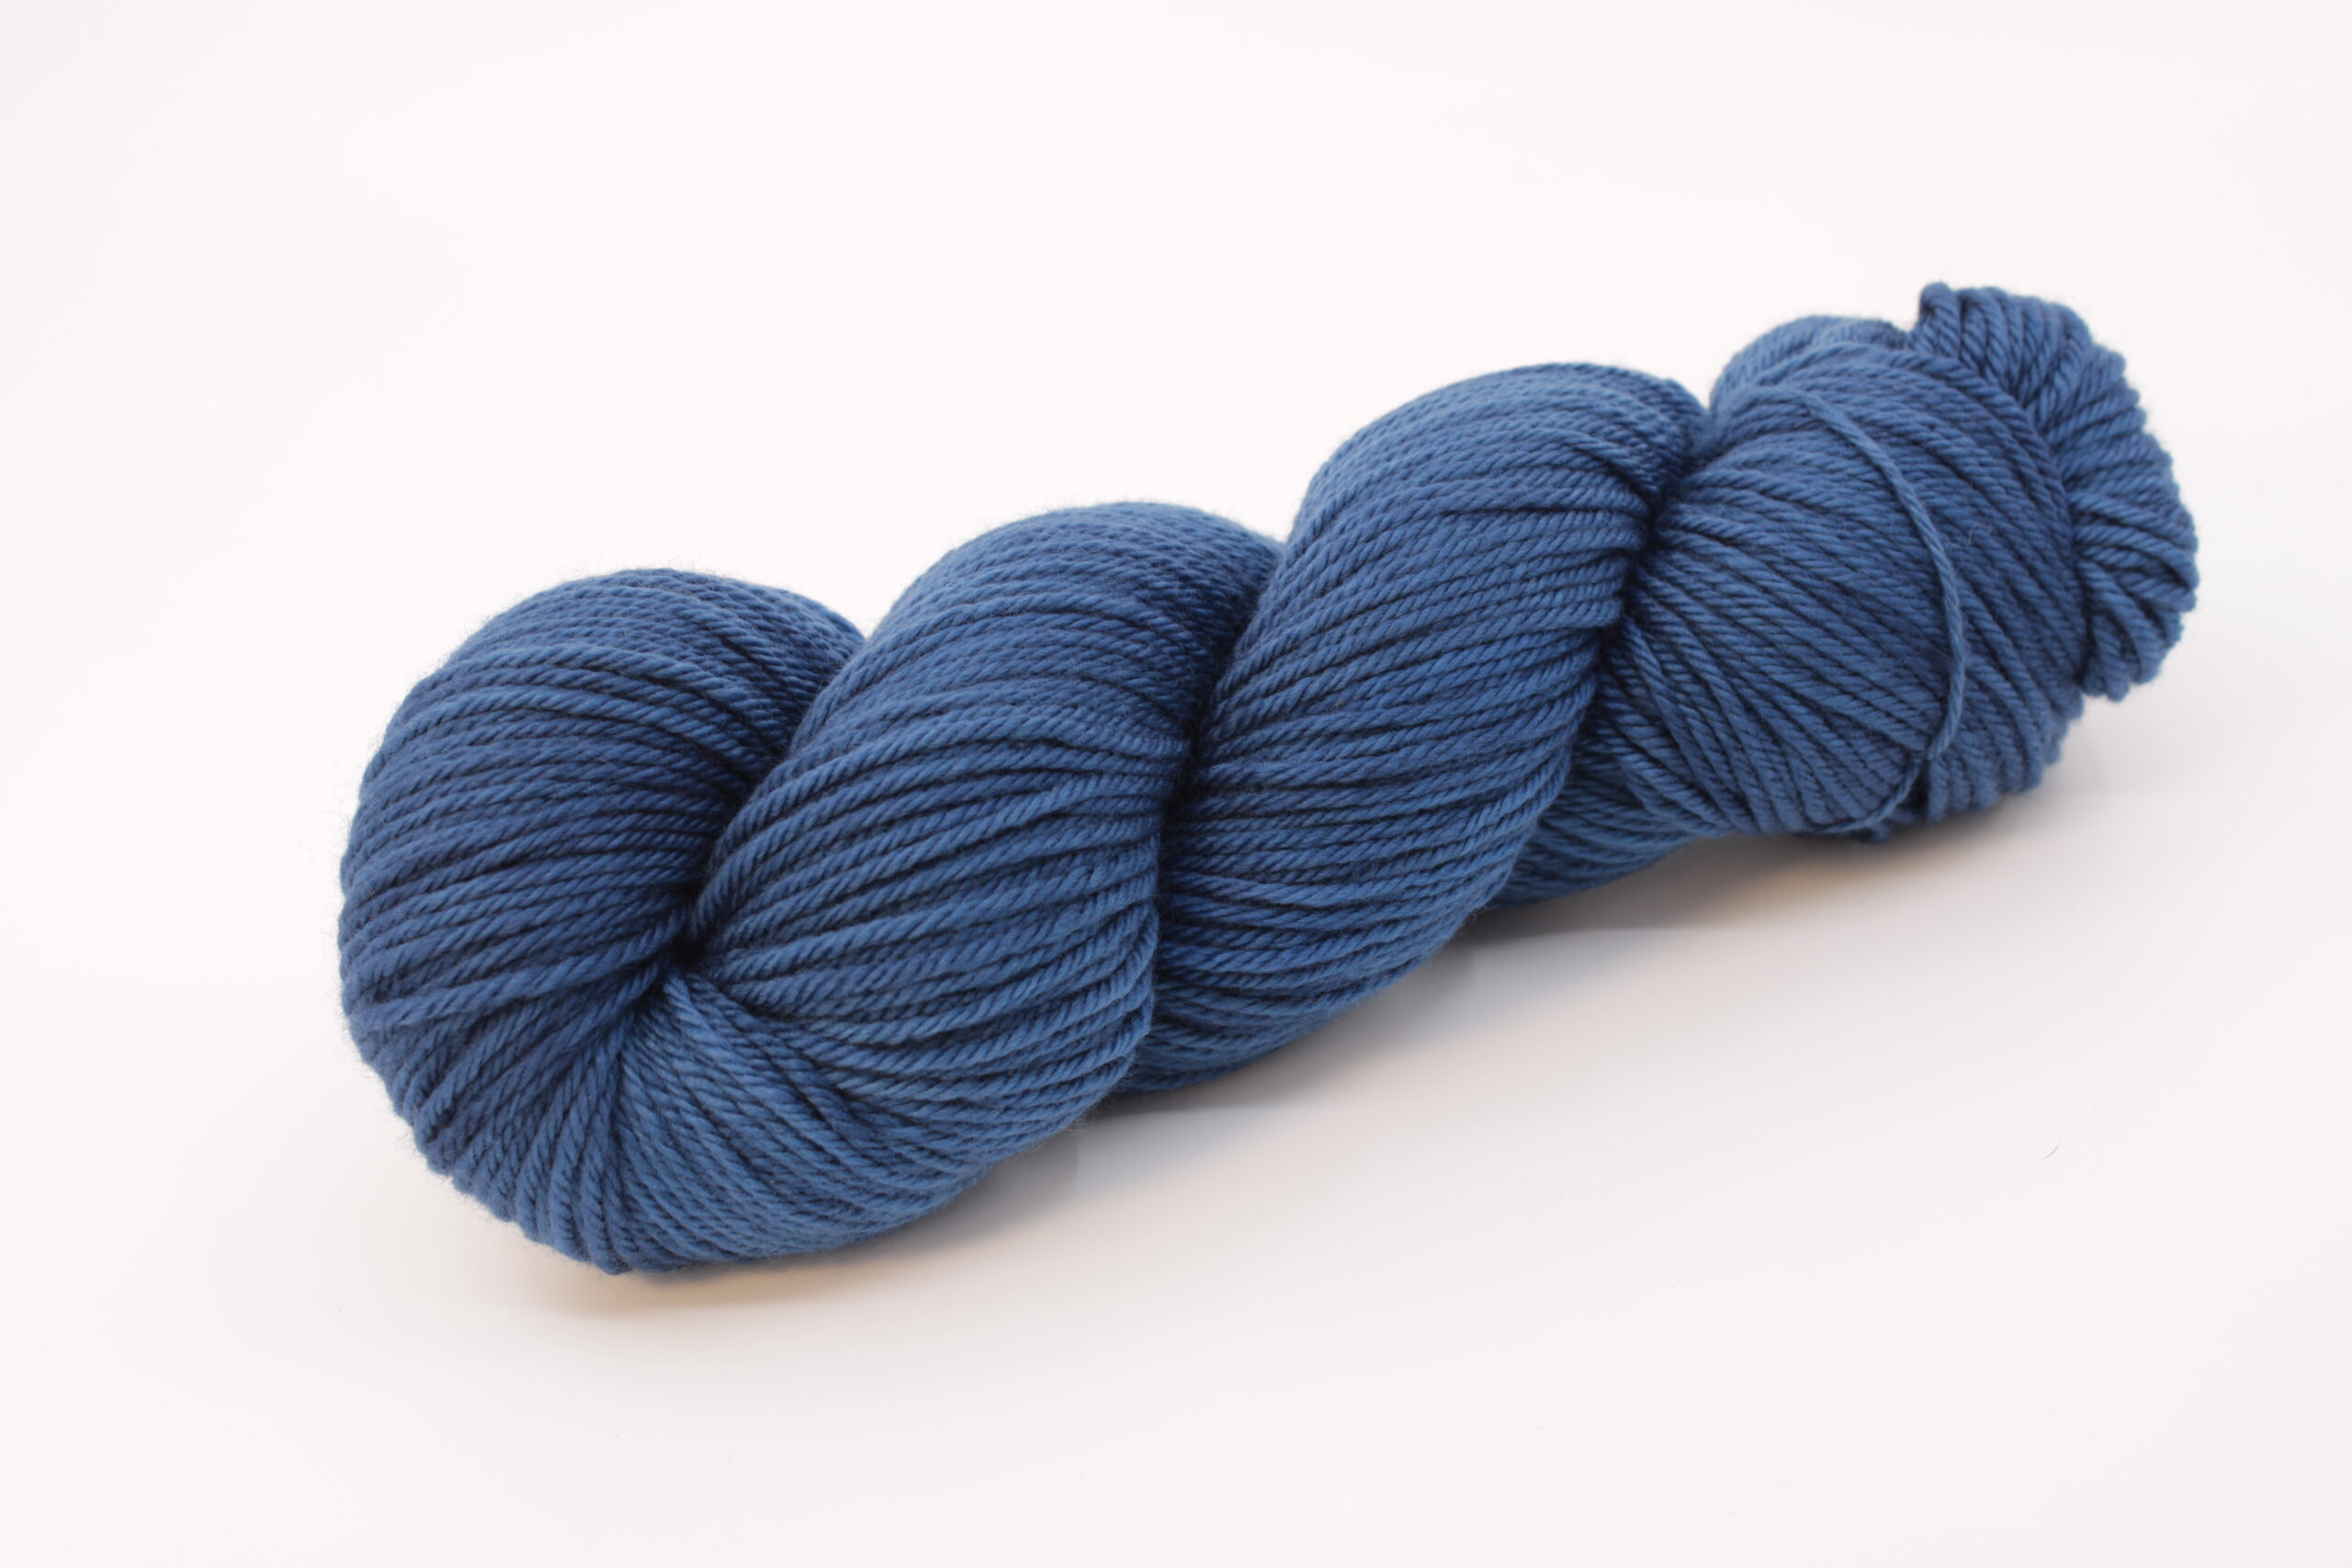 Fibrani wool, base: Flocon DK. 100% untreated merino wool, blue color. Color: Alba.